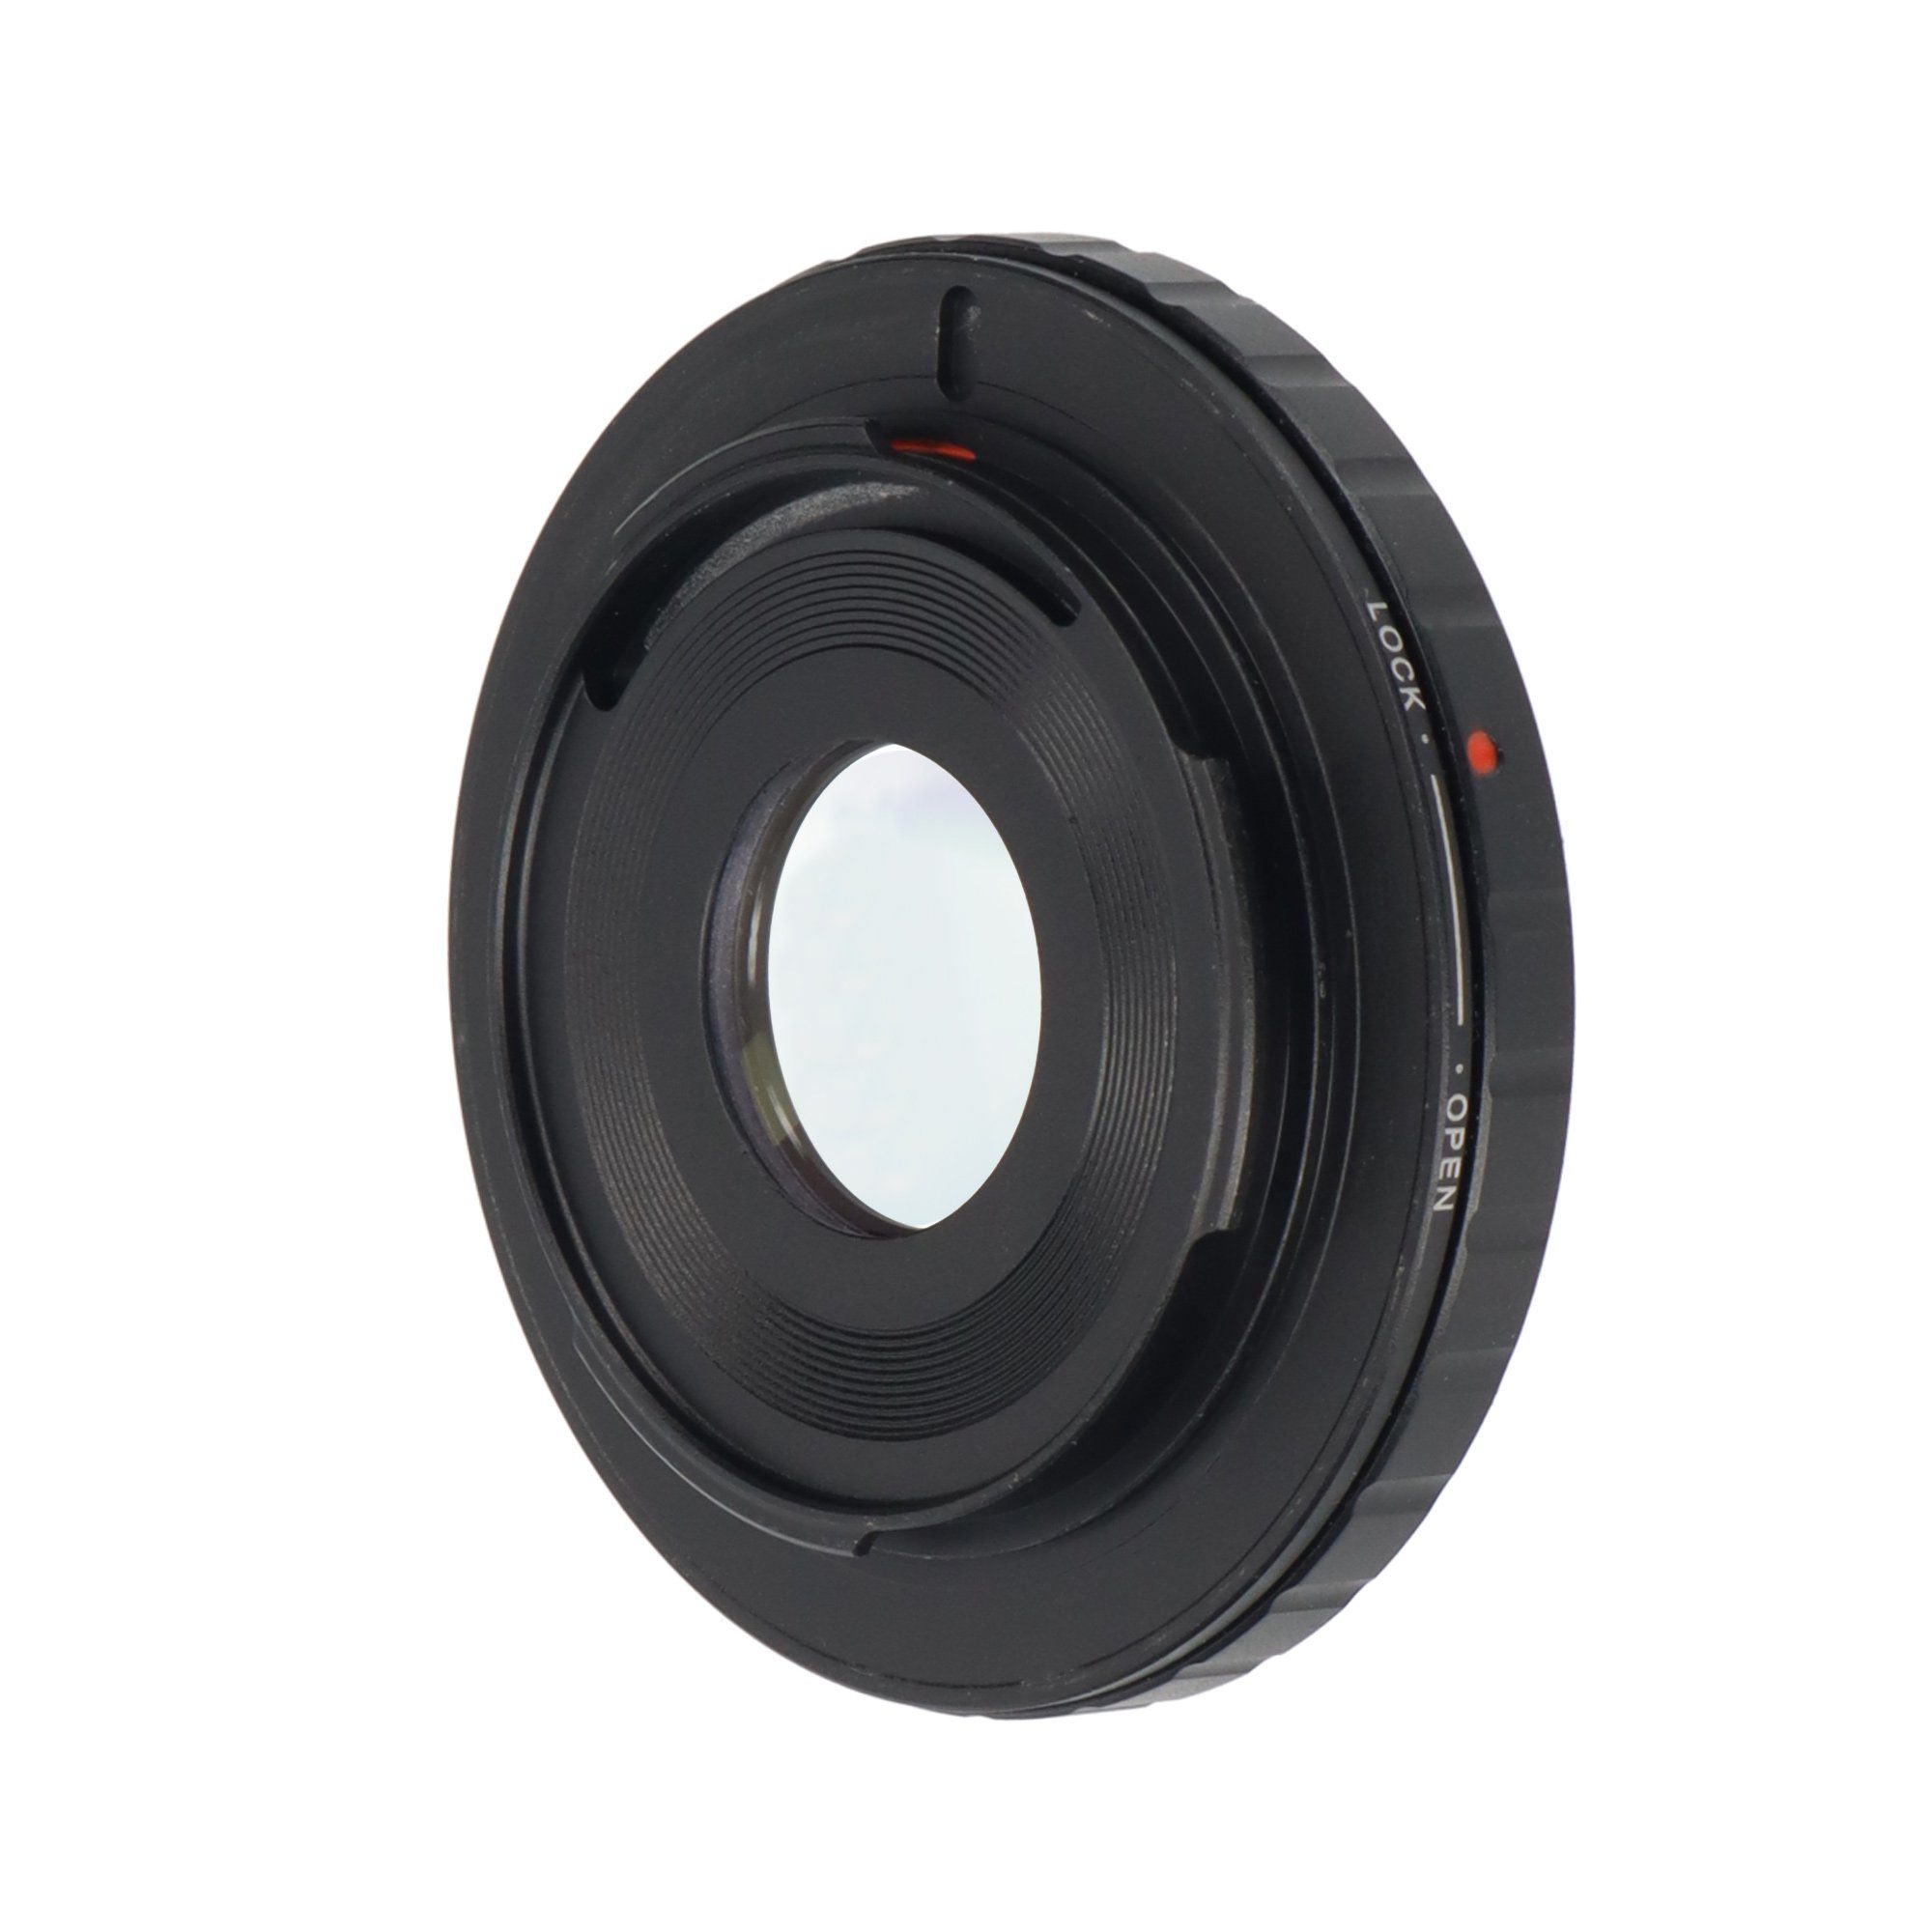 FD-Objektive Adapter A-Mount Linse Canon - Korrektur ayex + Objektiveadapter Sony